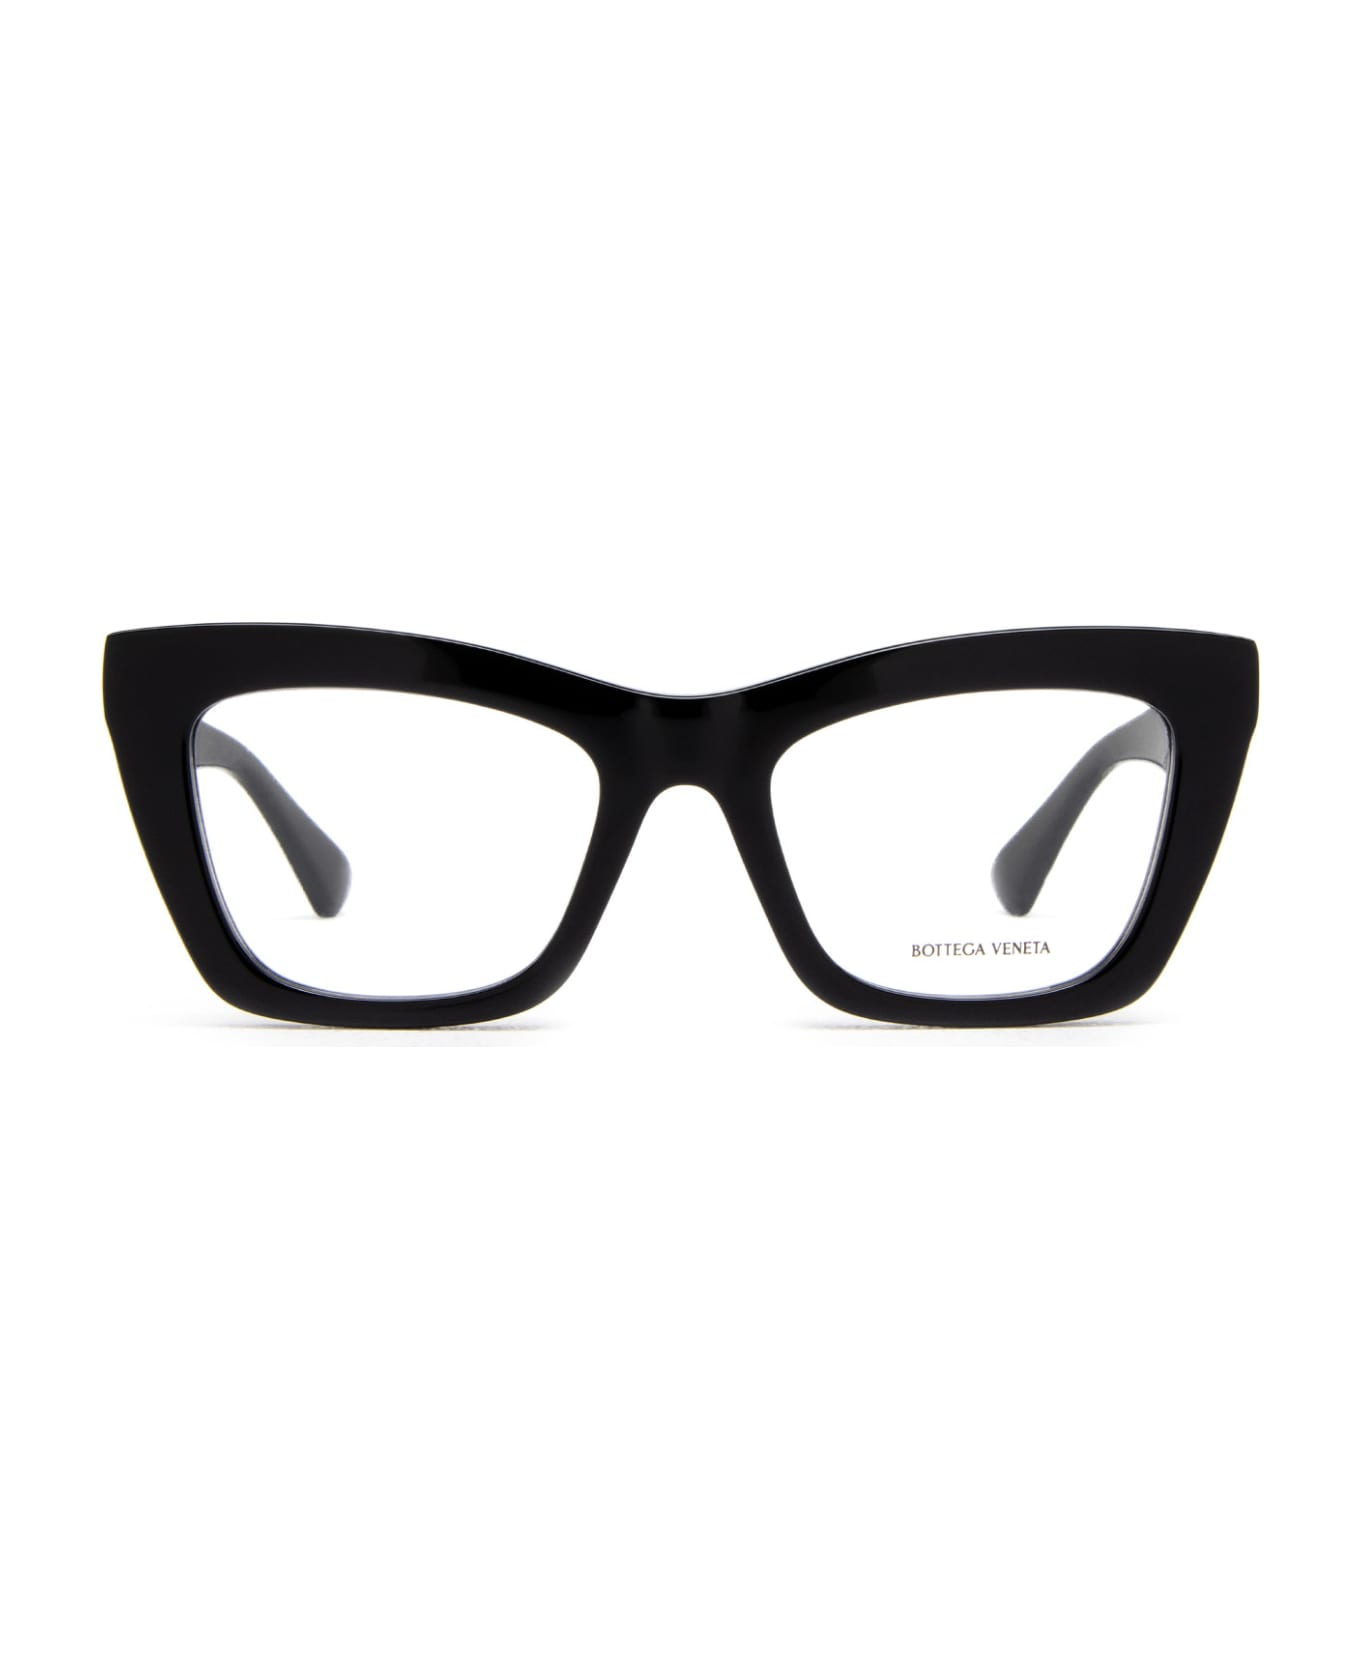 Bottega Veneta Eyewear Bv1215o Black Glasses - Black